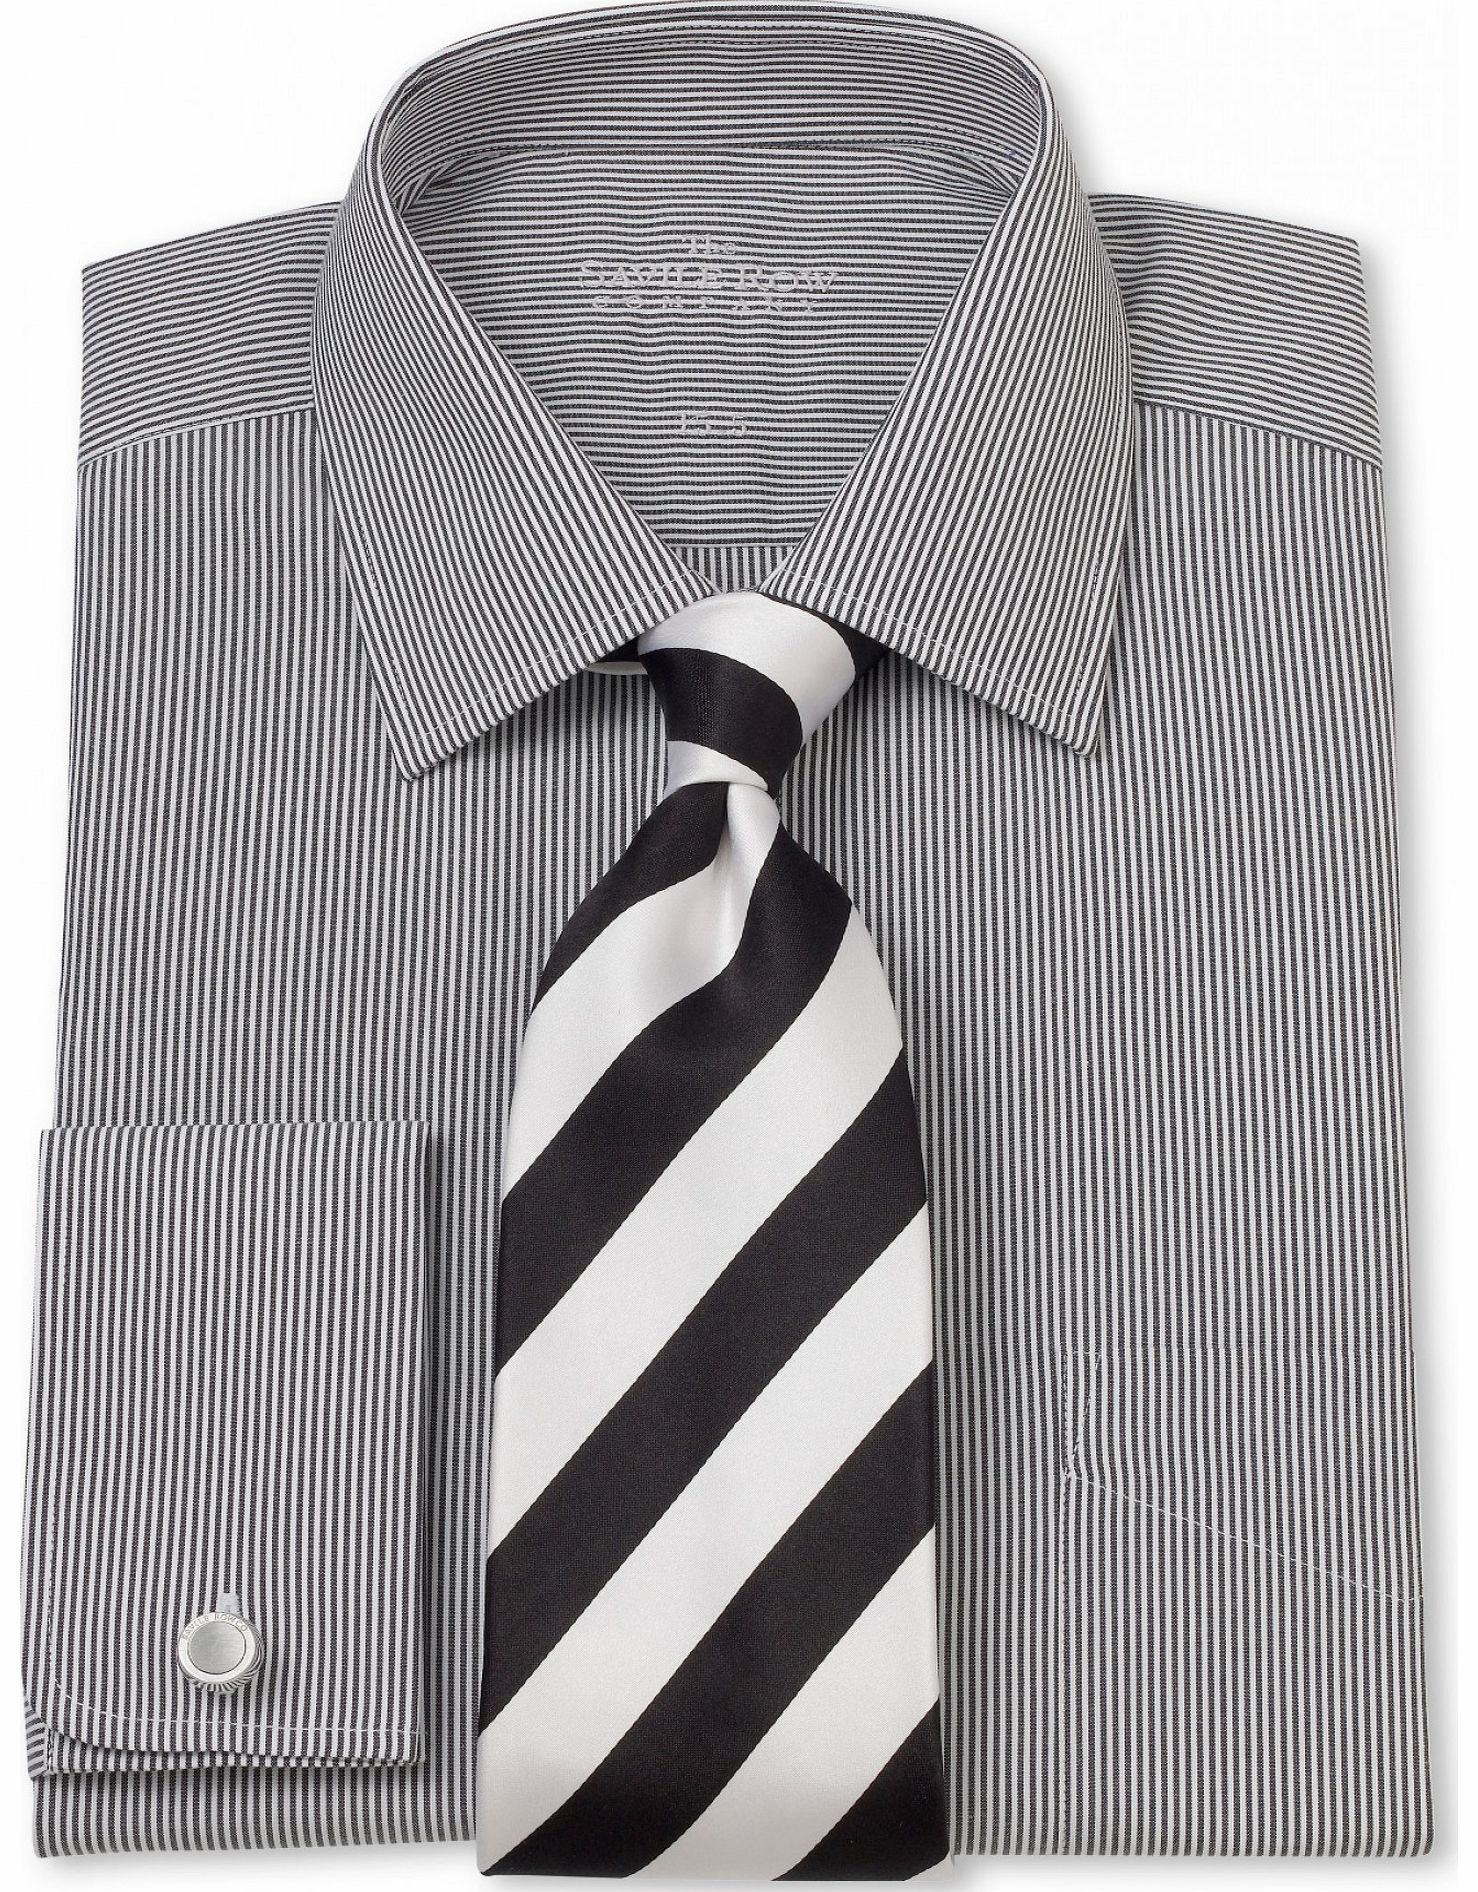 Savile Row Company Black White Bengal Stripe Classic Fit Shirt 19